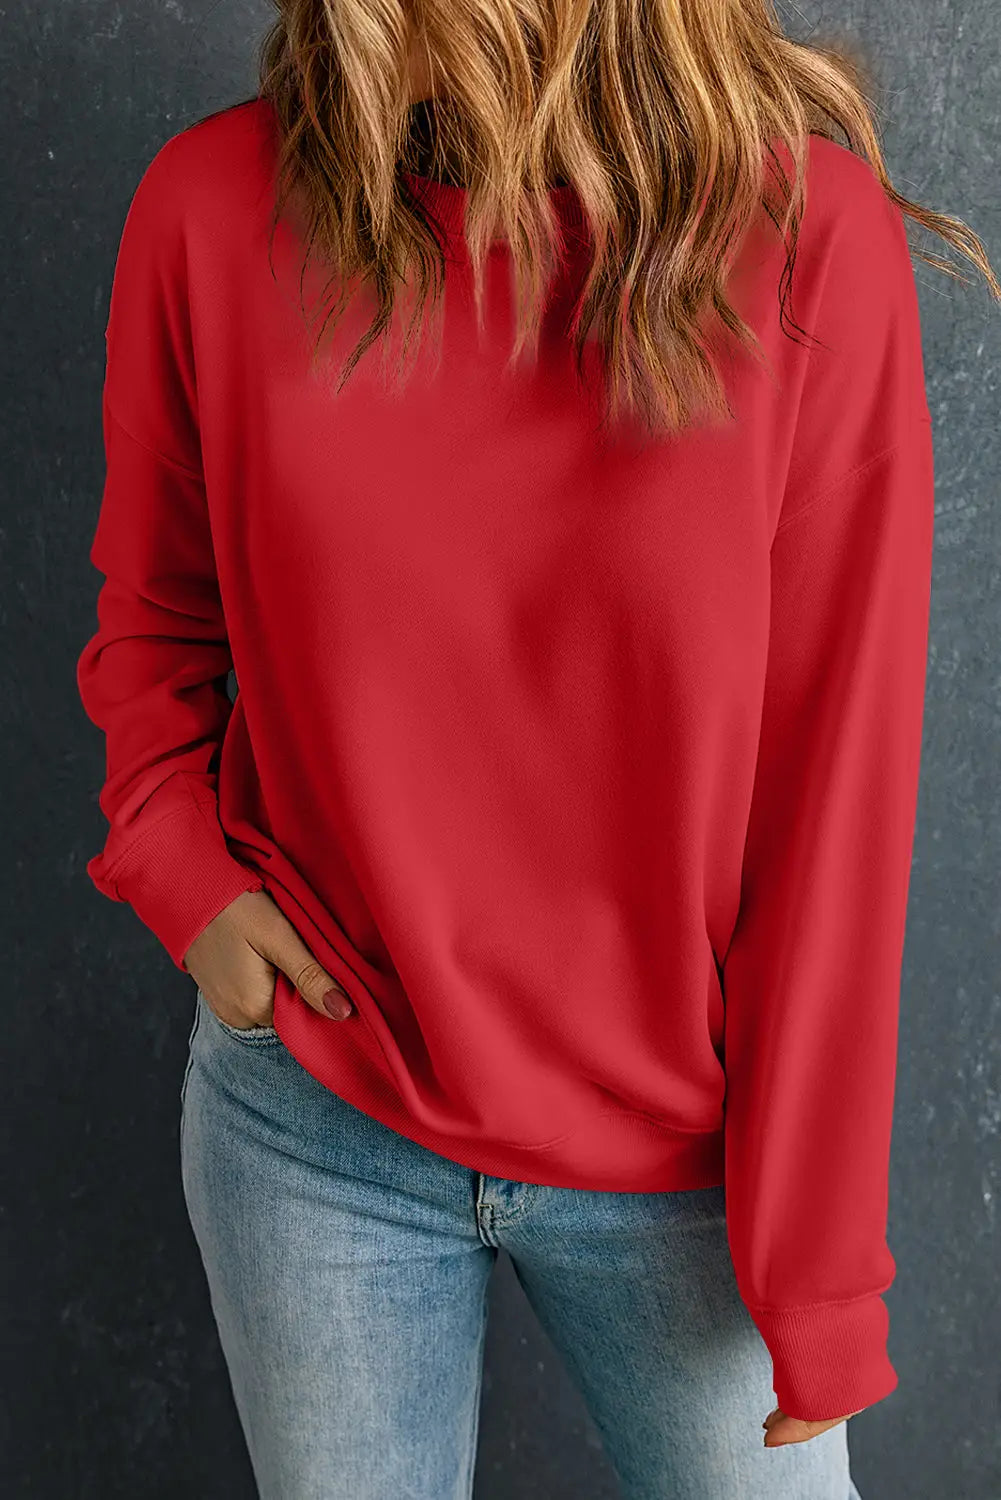 Beige solid classic crewneck pullover sweatshirt - red / s / 50% polyester + 50% cotton - sweatshirts & hoodies